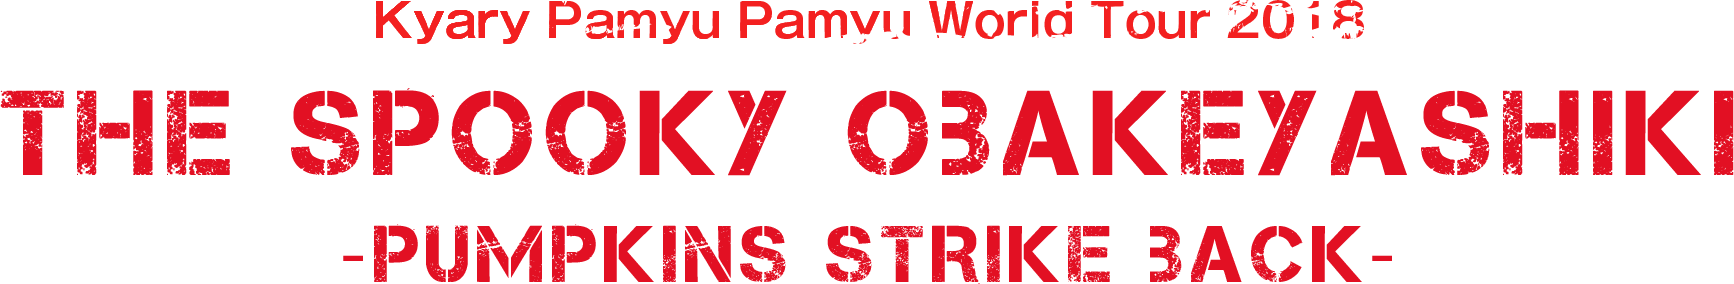 Kyary Pamyu Pamyu World Tour 2018 THE SPOOKY OBAKEYASHIKI -PUMPKINS STRIKE BACK-